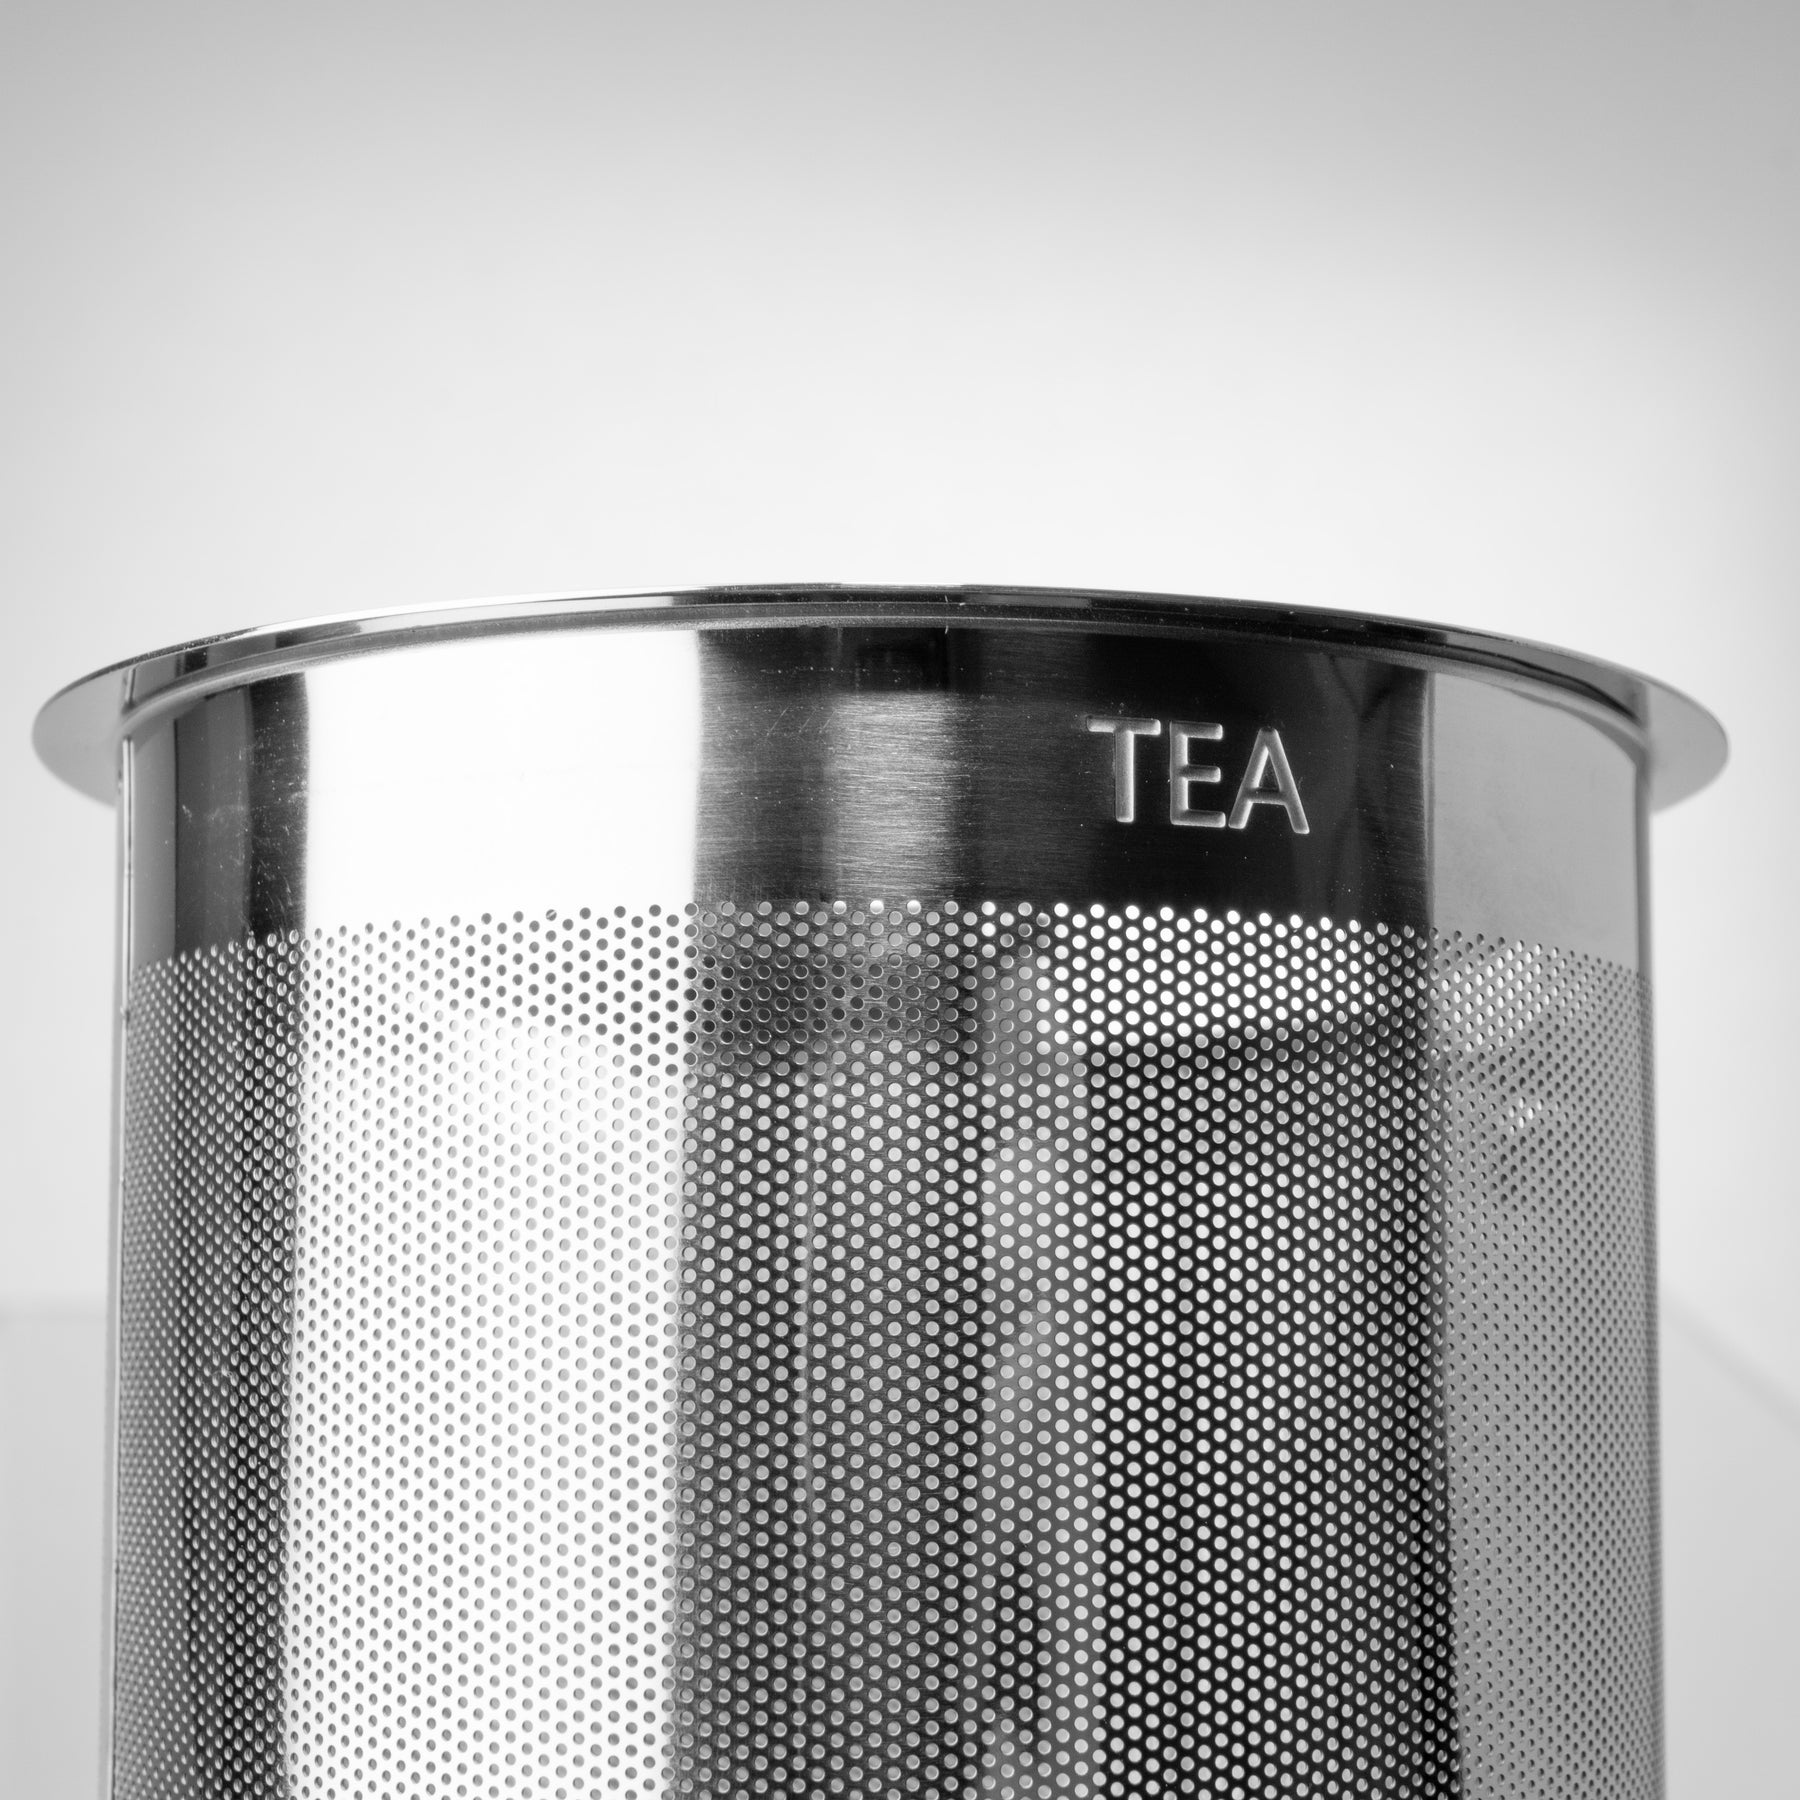 Tea filter for Arca